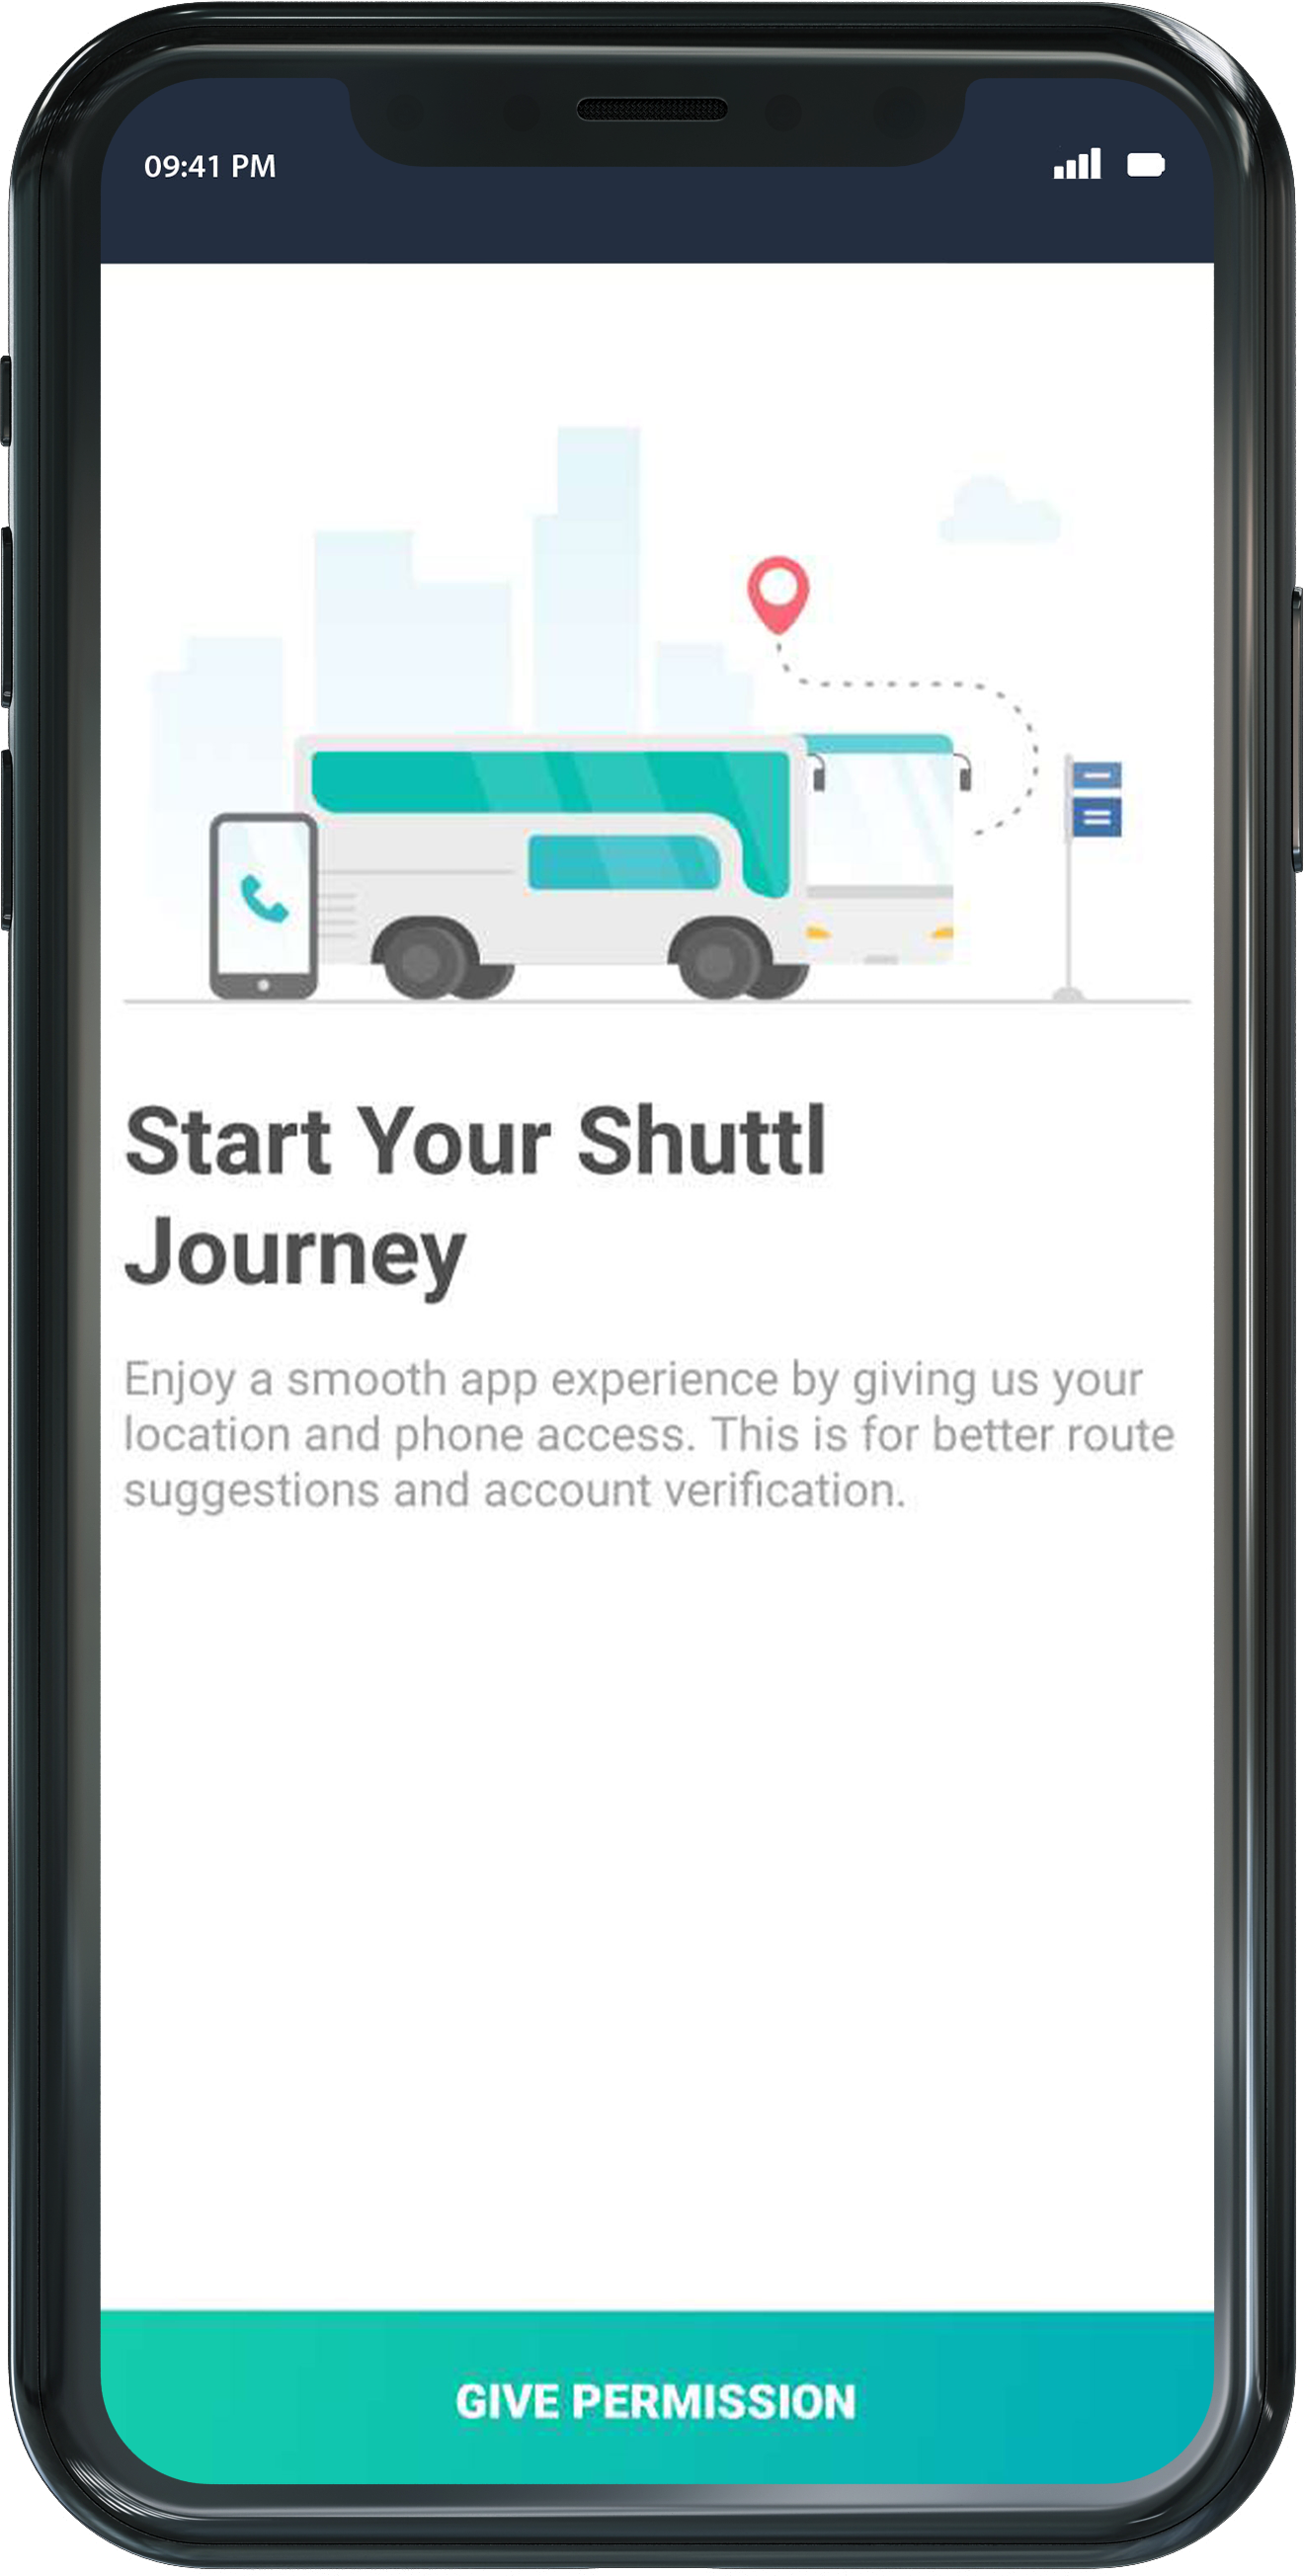 Shuttle Service Clone App - permission